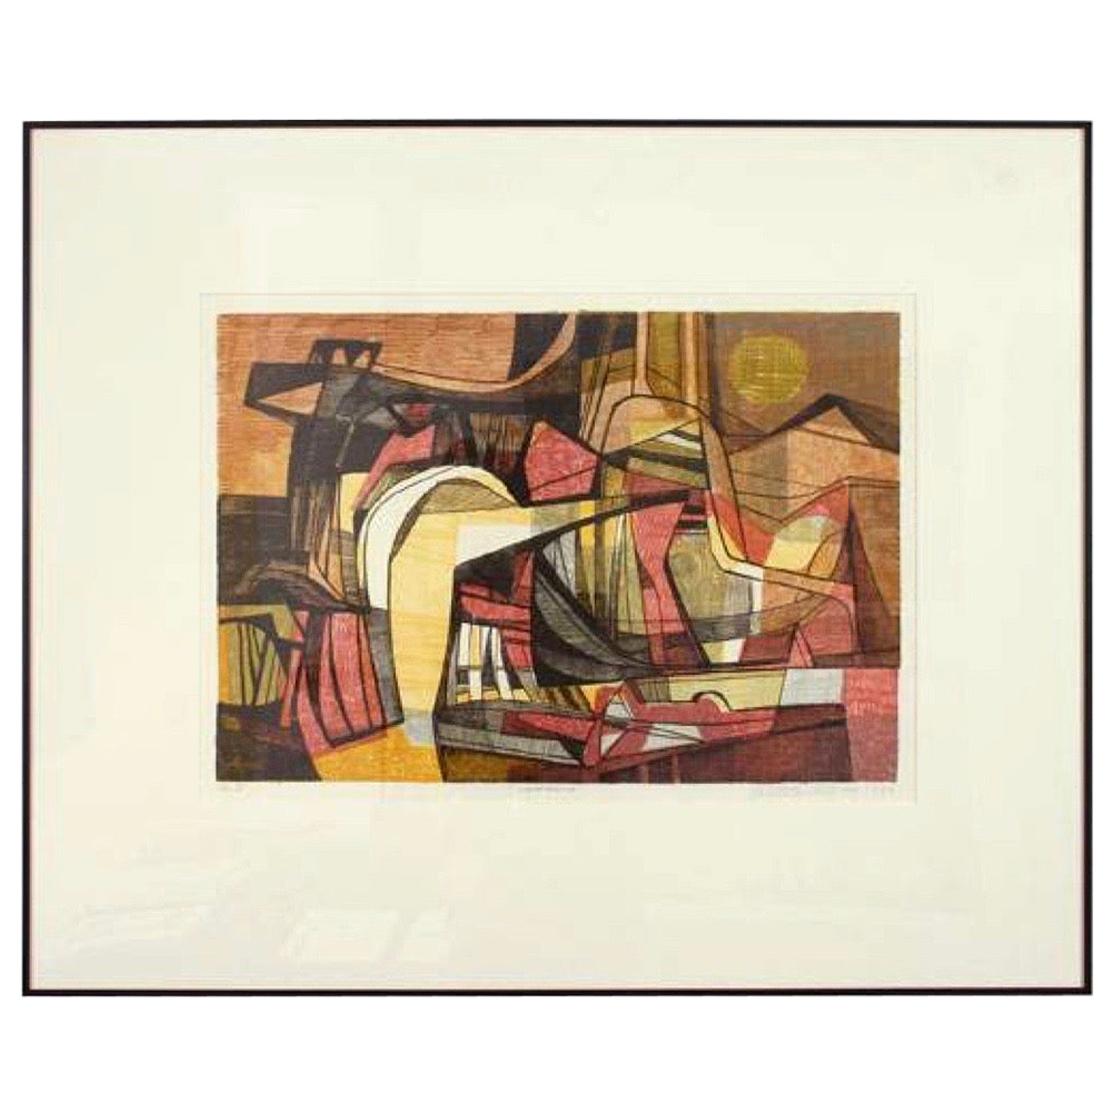 "Itapecerica" Framed Print by Roberto Burle Marx, 1988, 1stdibs New York